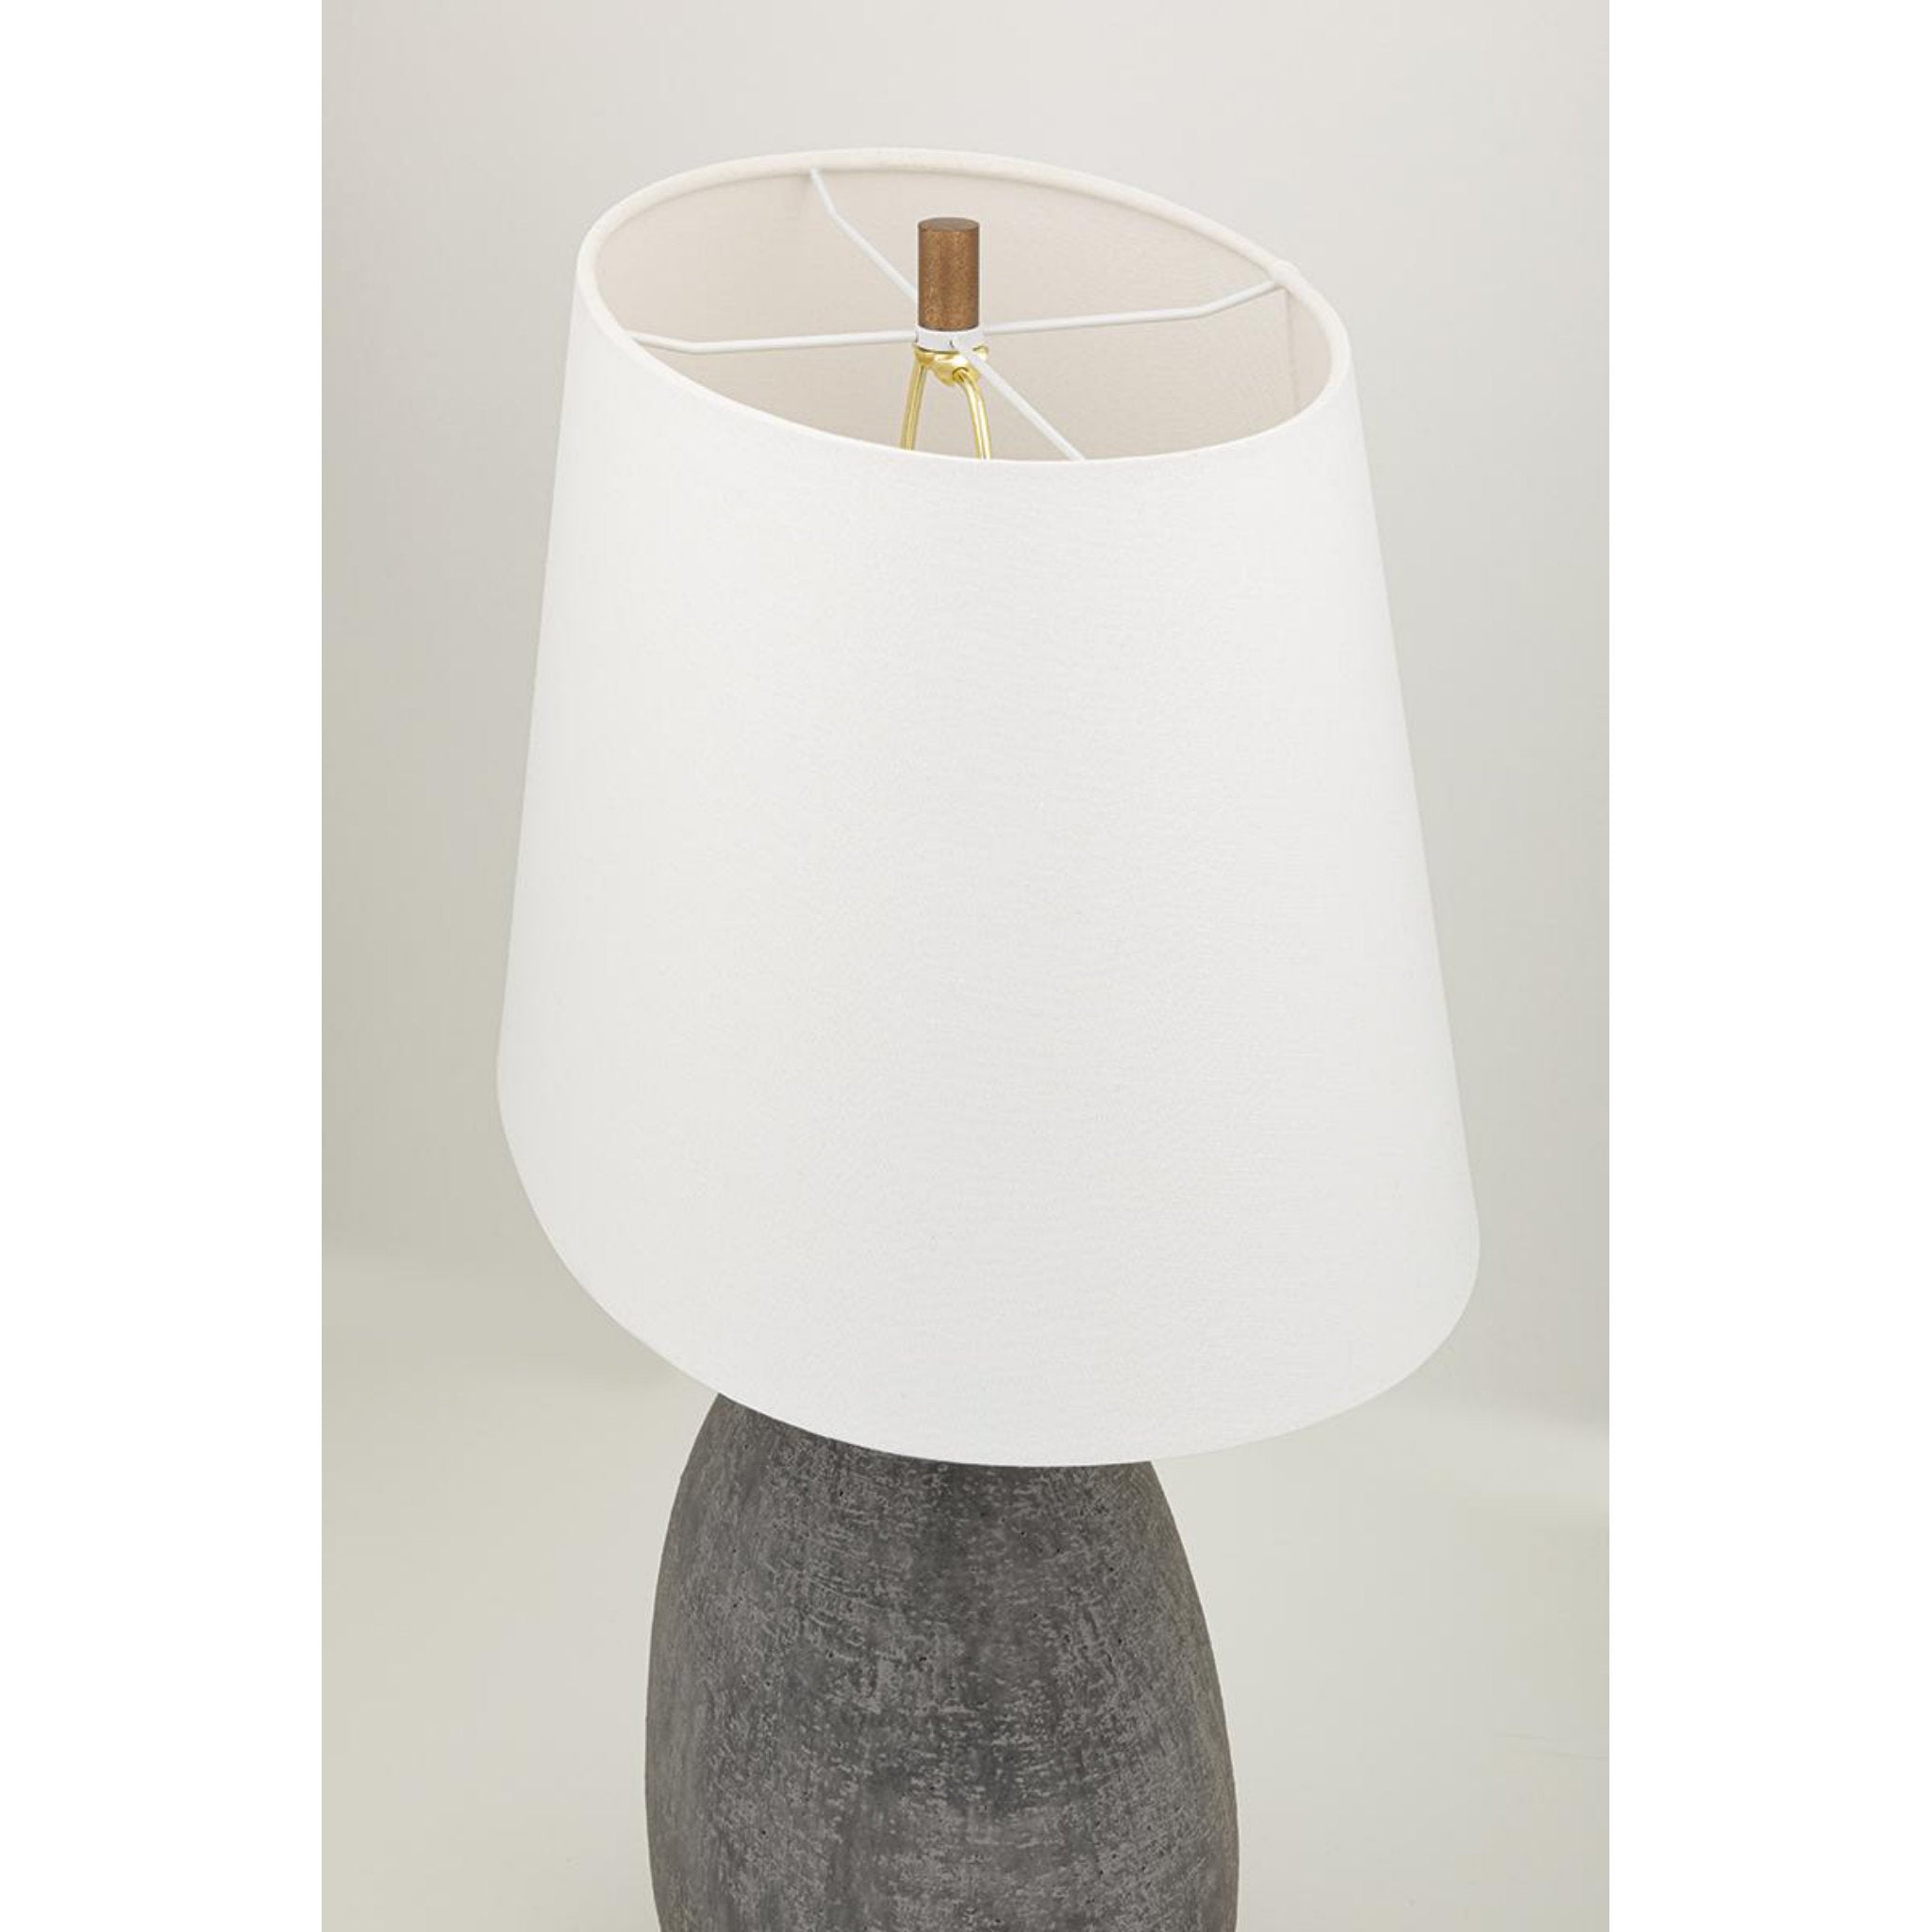 Denali 1 Light Table Lamp in White